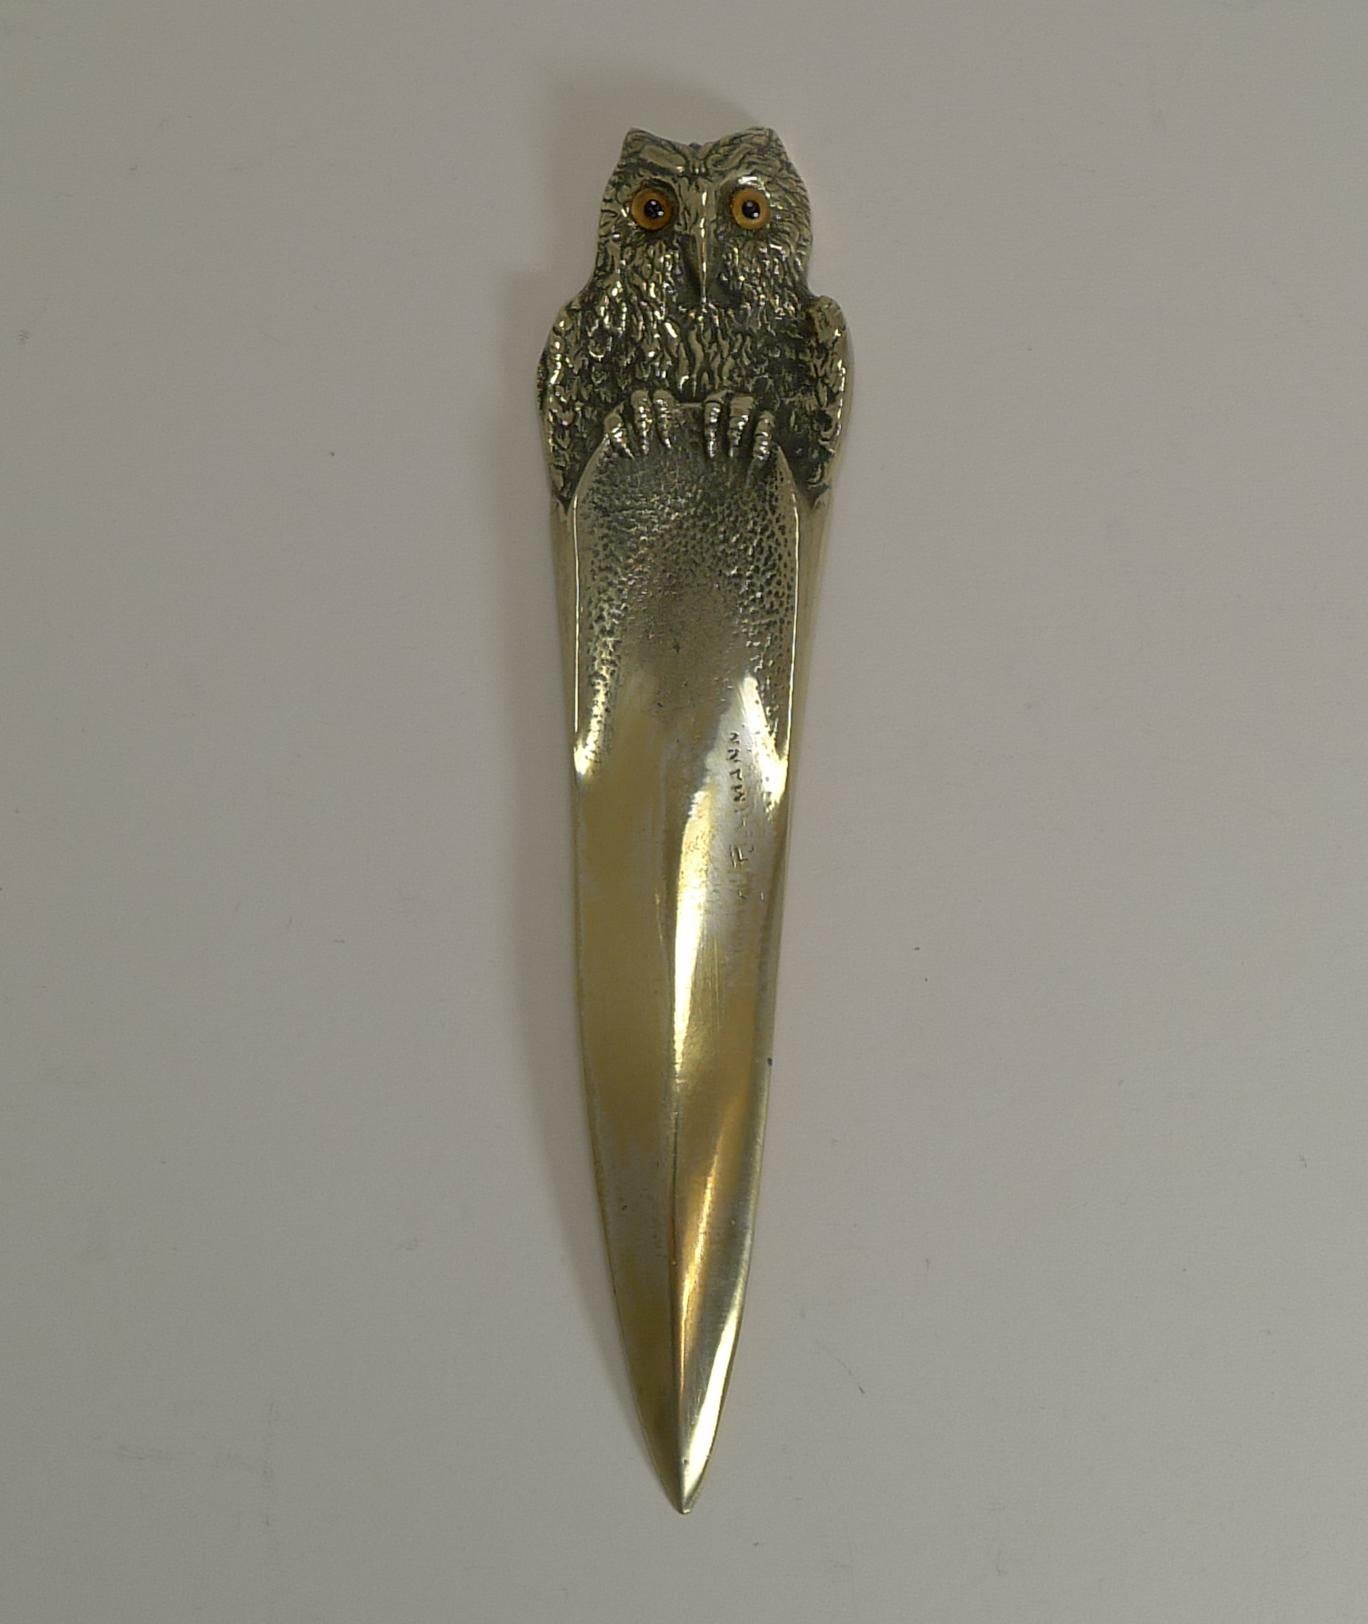 Edwardian Antique Brass Figural Letter Opener or Paper Knife, Owl, circa 1900, Signed